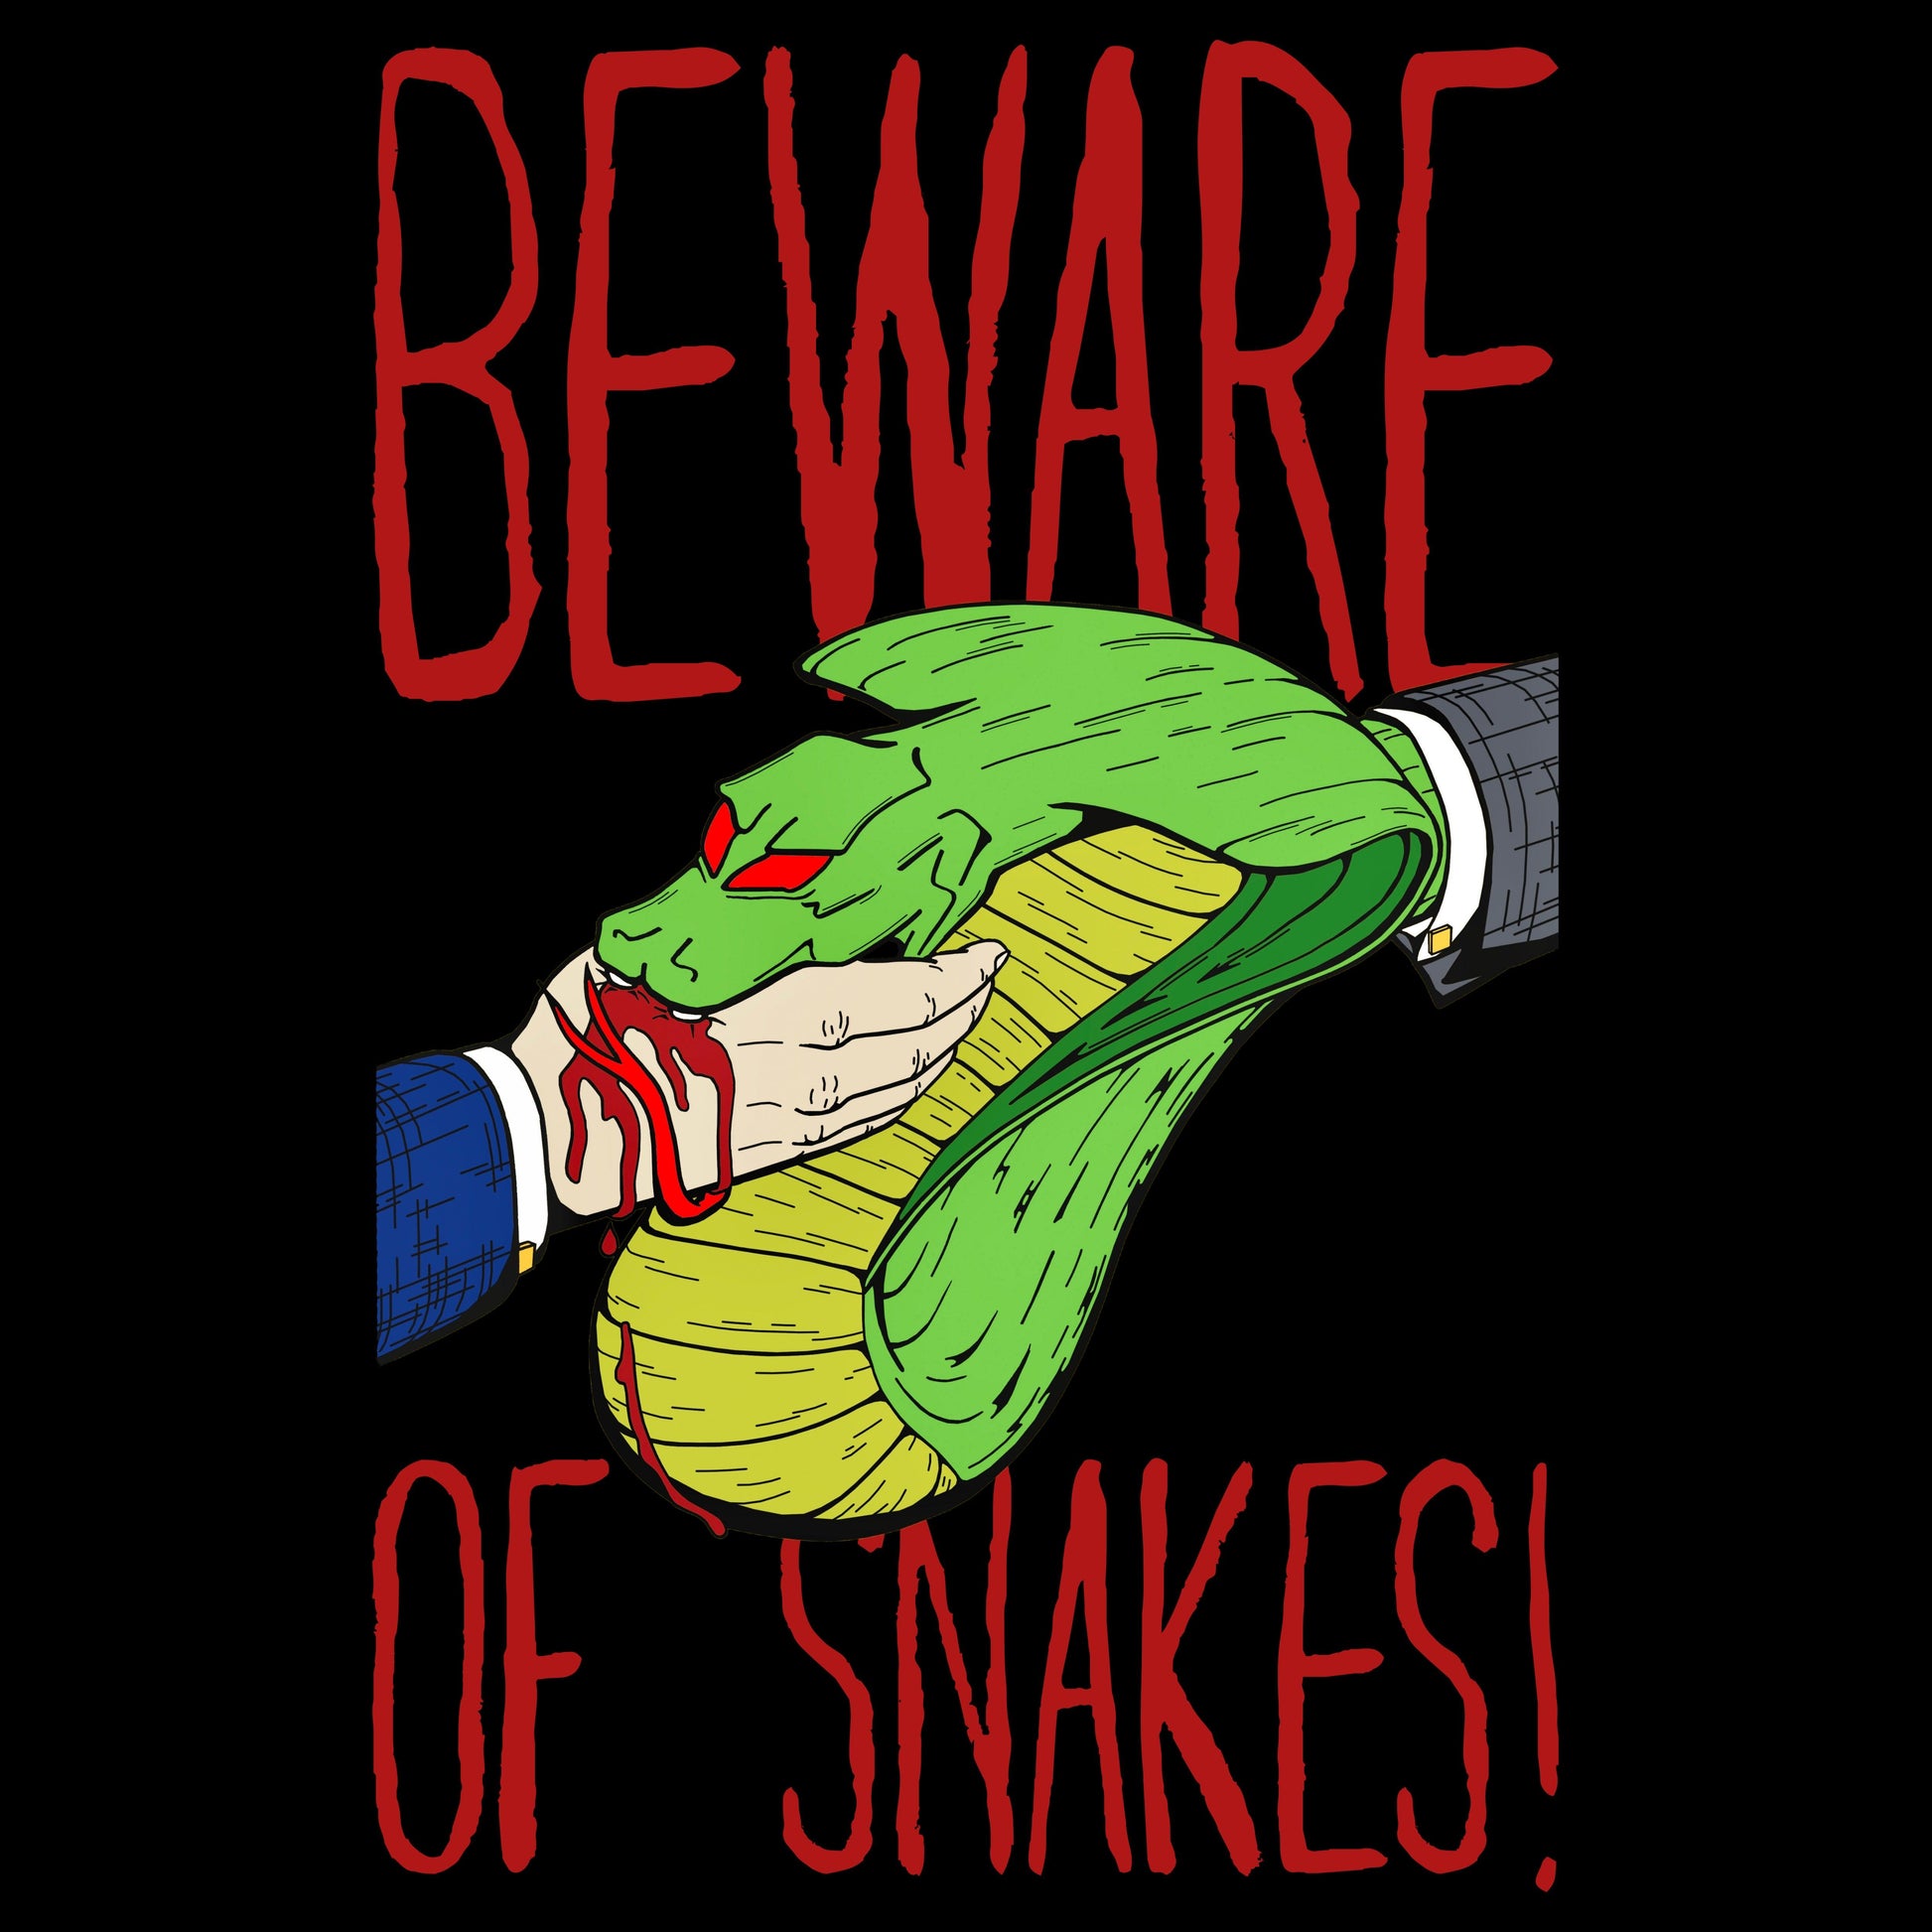 beware of snakes [hoodie] - ovrsze